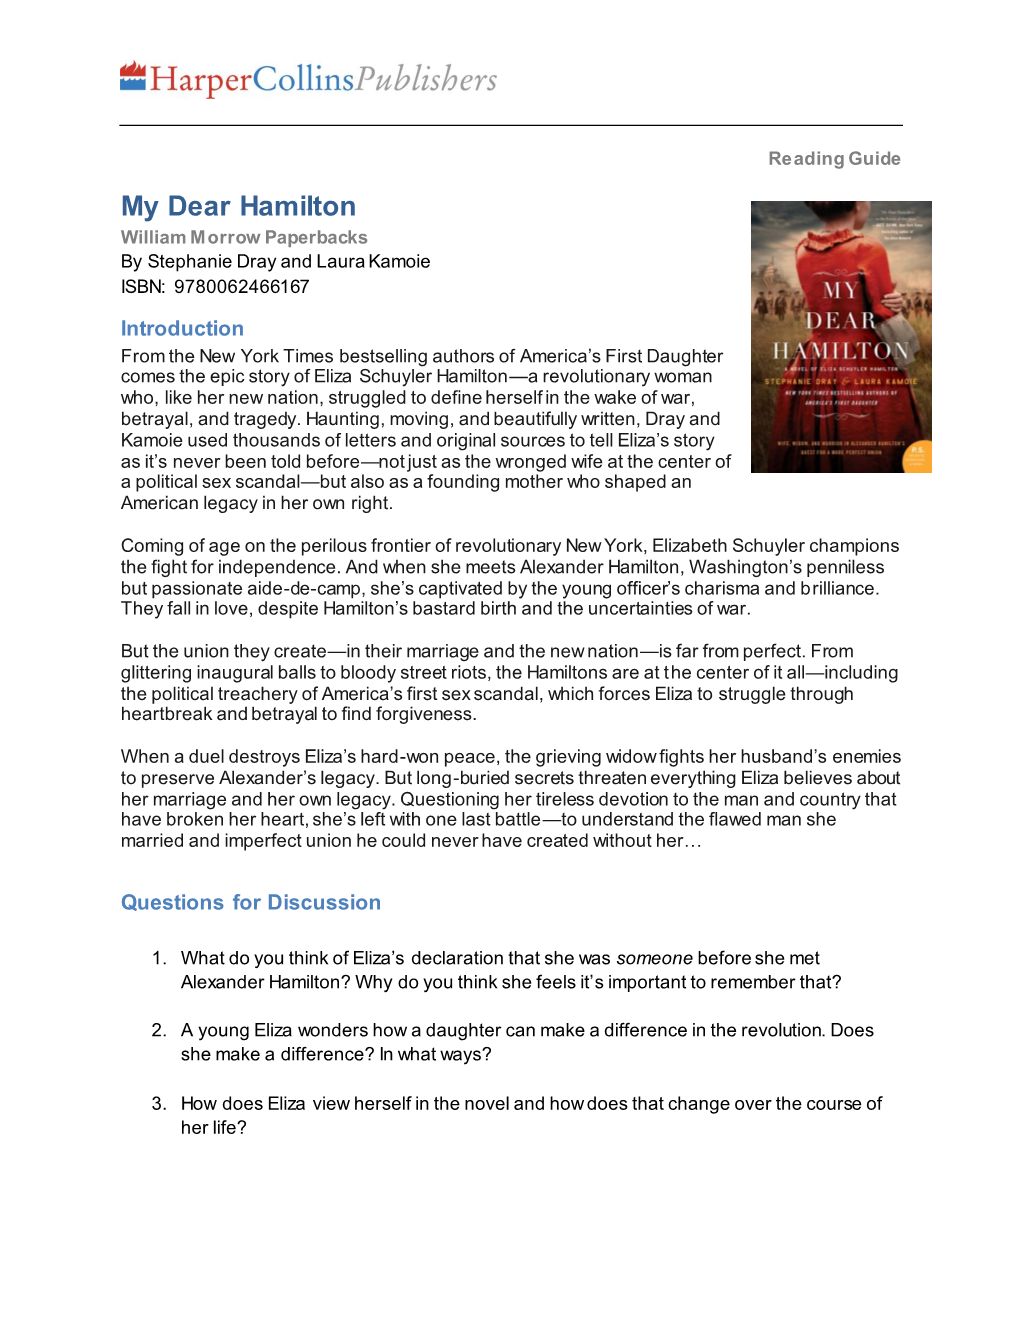 My Dear Hamilton William Morrow Paperbacks by Stephanie Dray and Laura Kamoie ISBN: 9780062466167